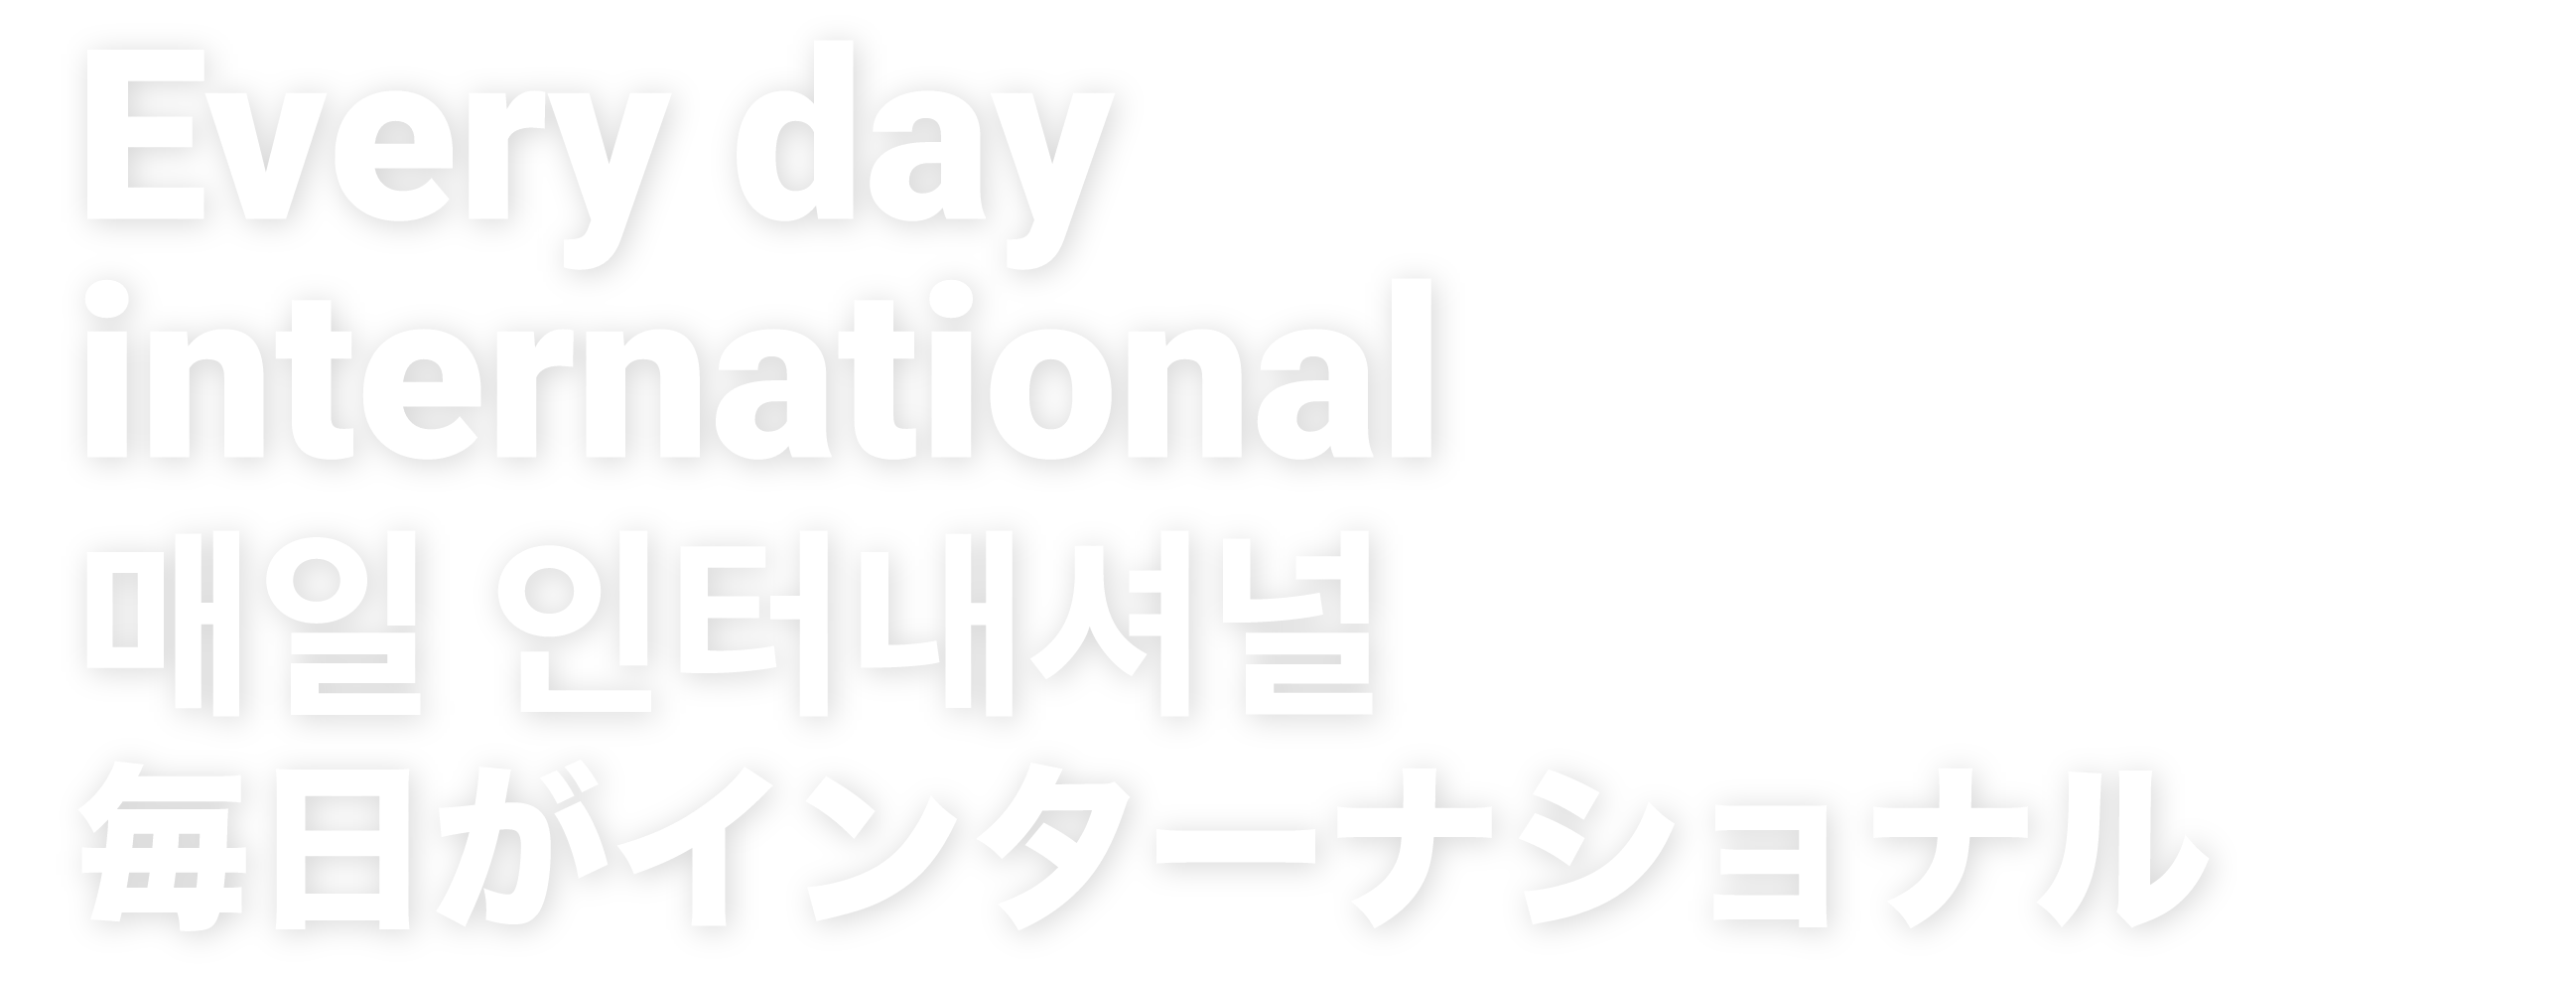 Every day international/매일 인터내셔널/毎日がインターナショナル